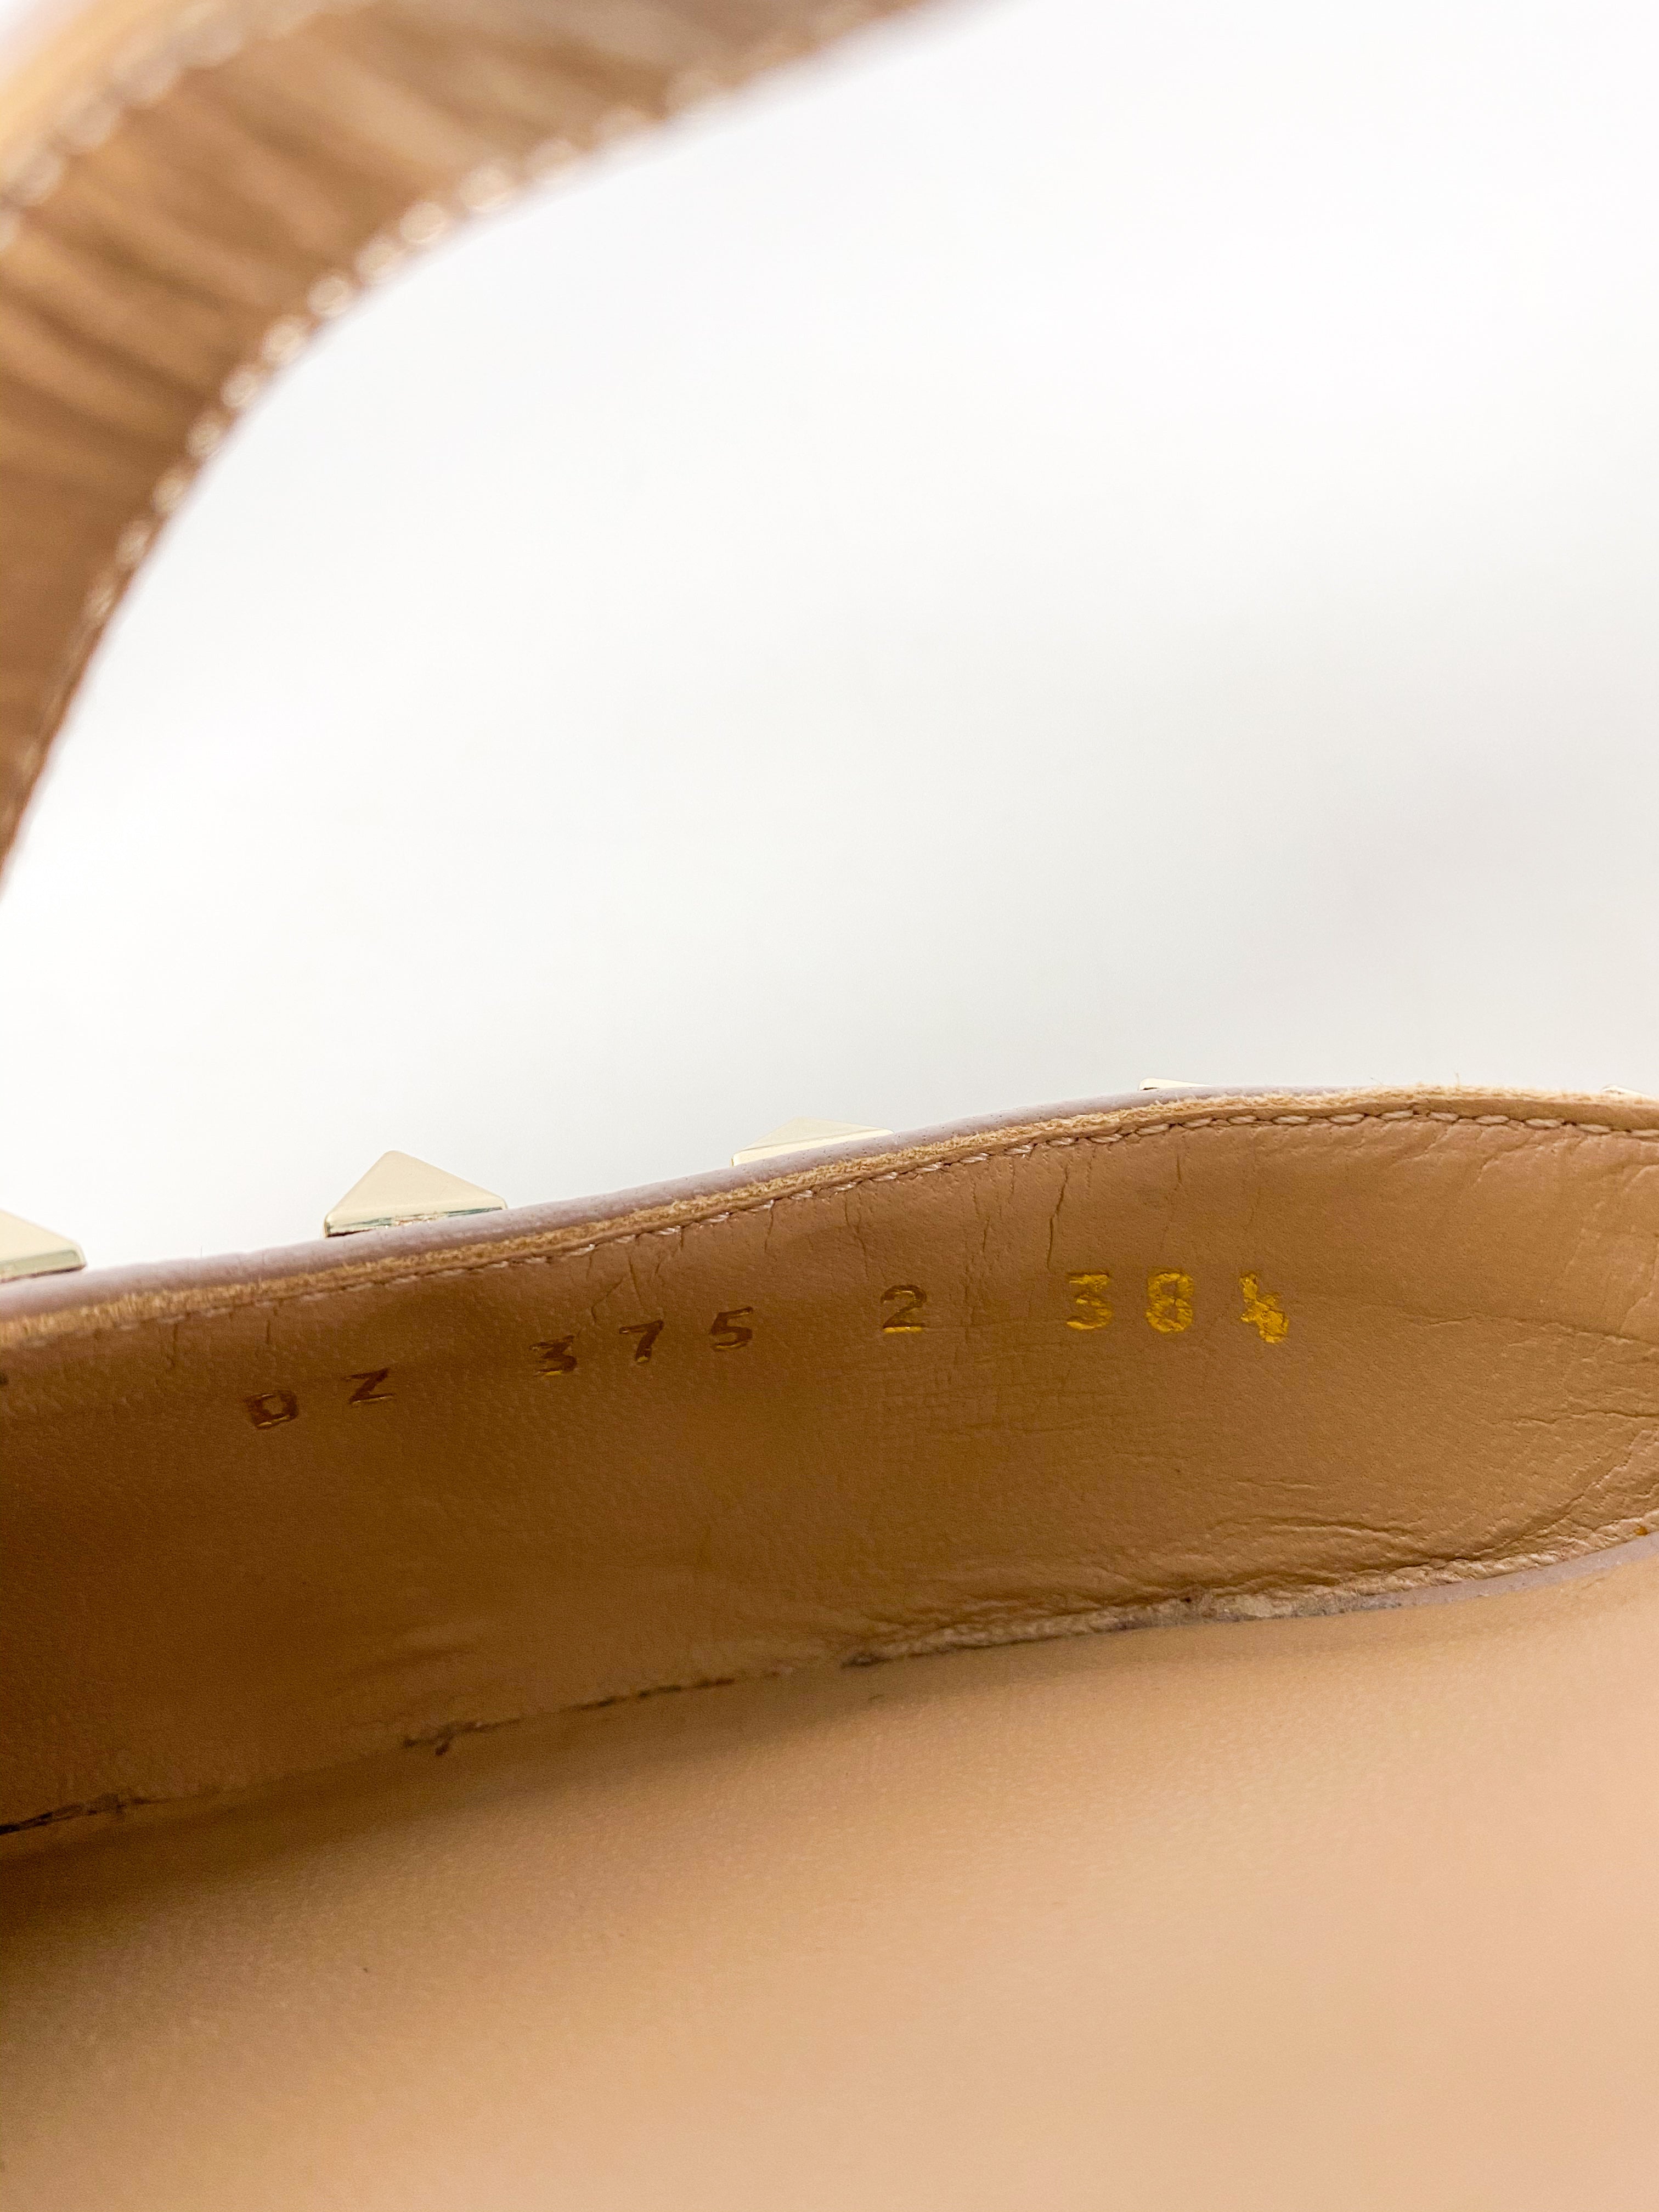 Valentino Garavani Rockstud Patent Leather Beige Kitten Heels Size 38.5 EUR (26cm)